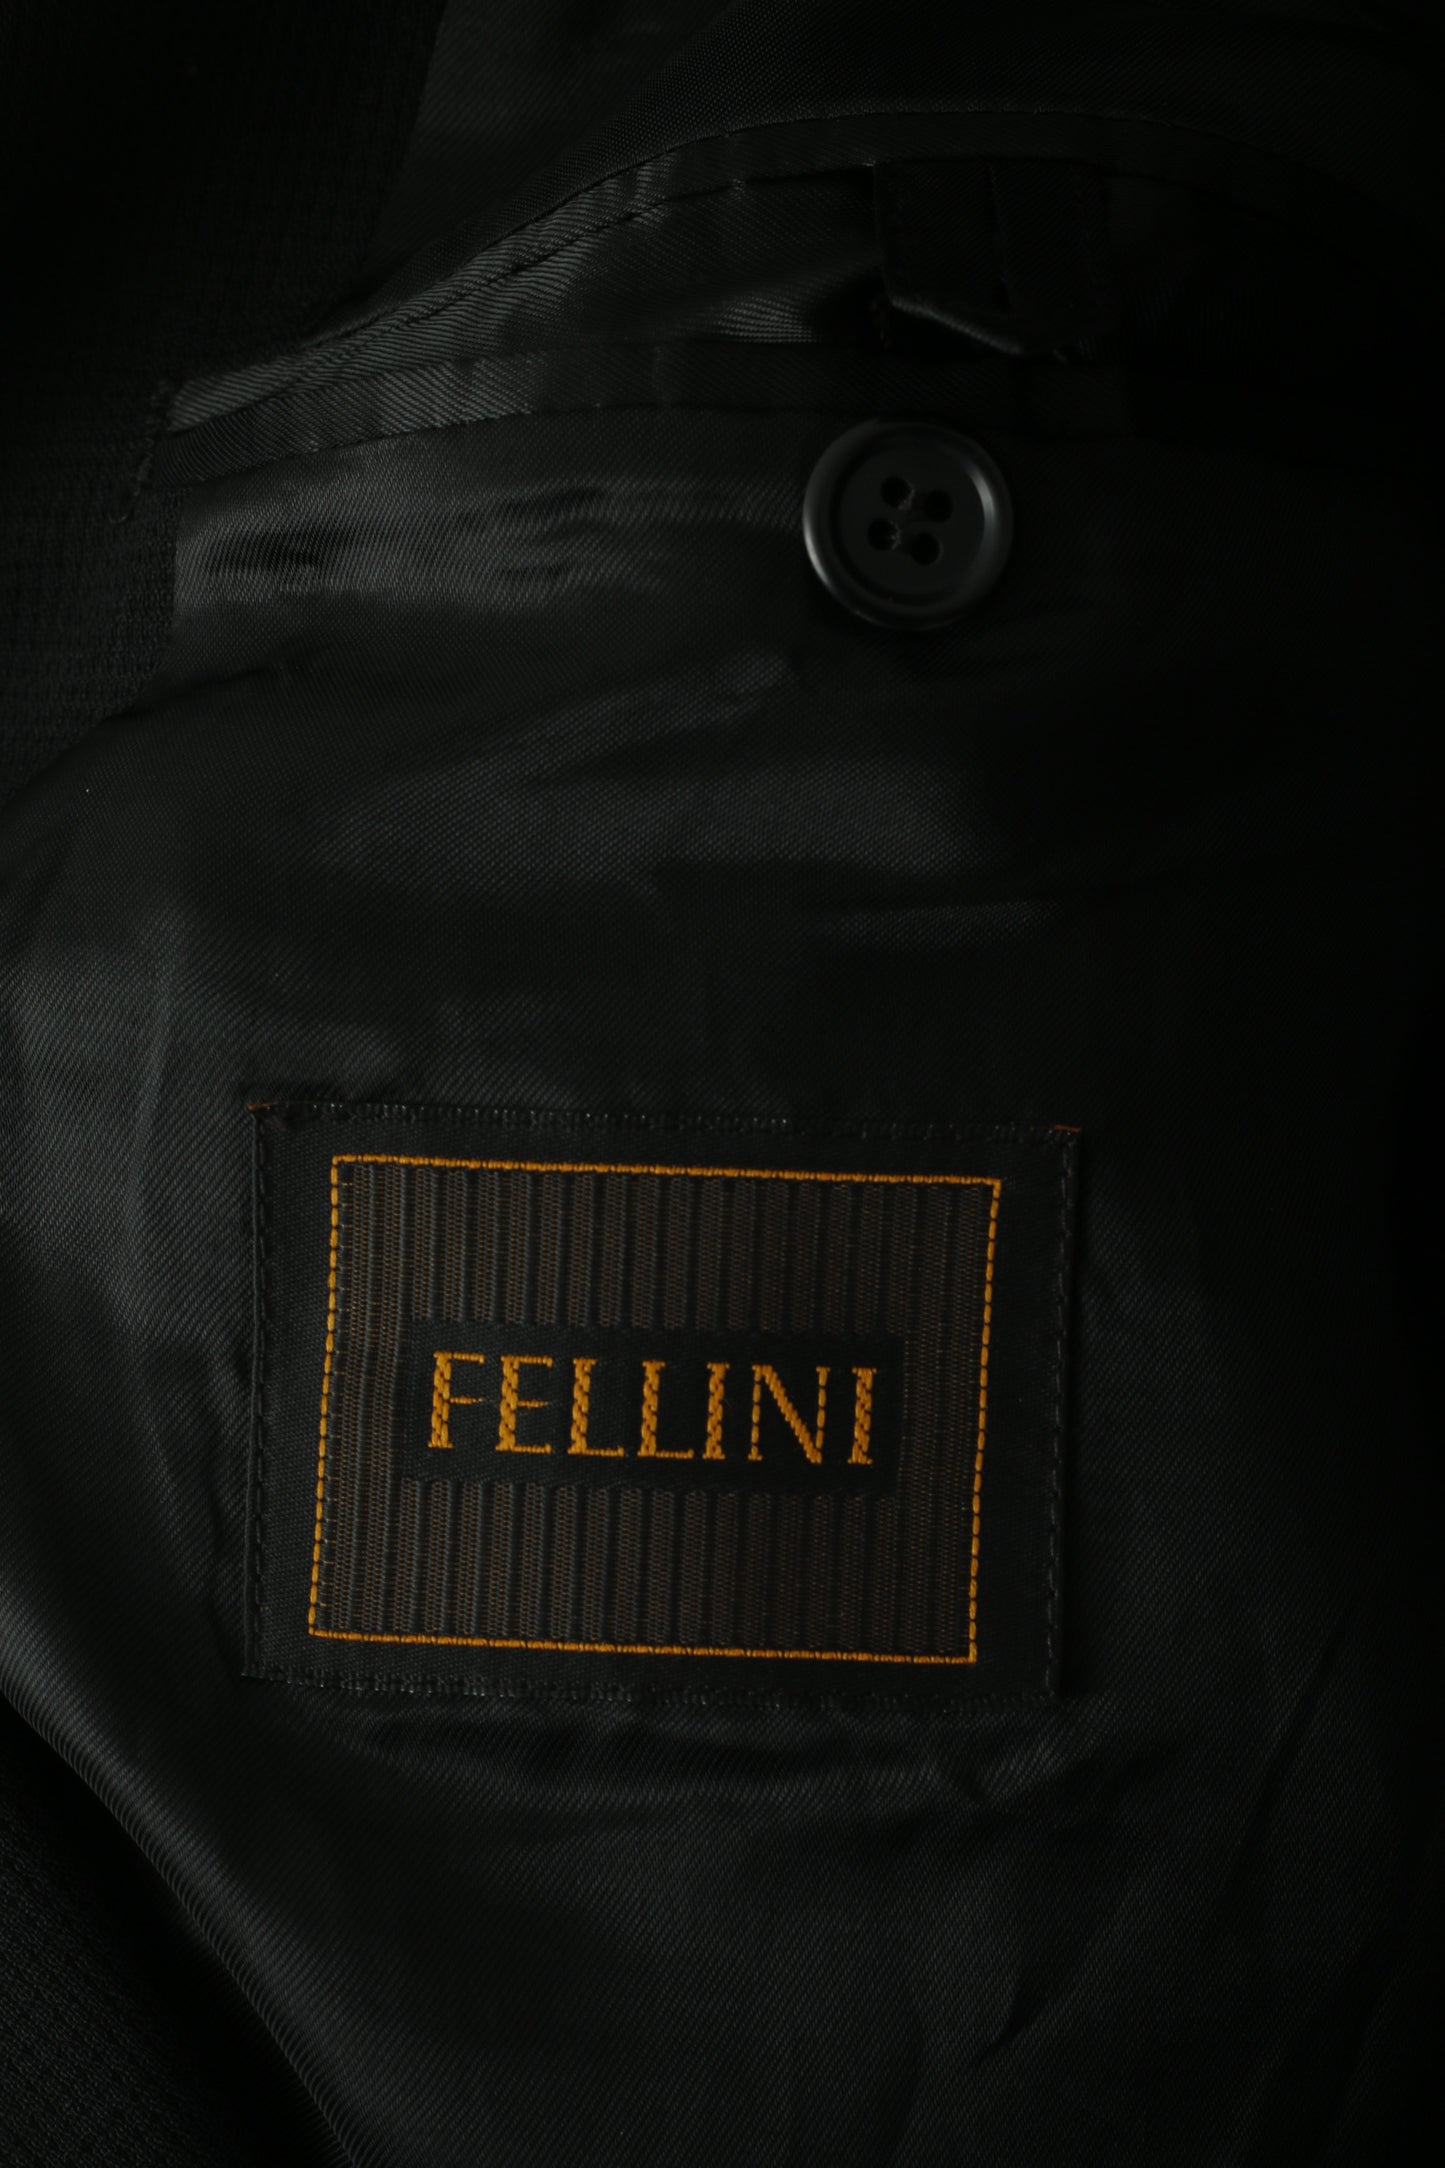 Fellini Men 44 L Blazer Black Wool Mini Check Classic Single Breasted Jacket